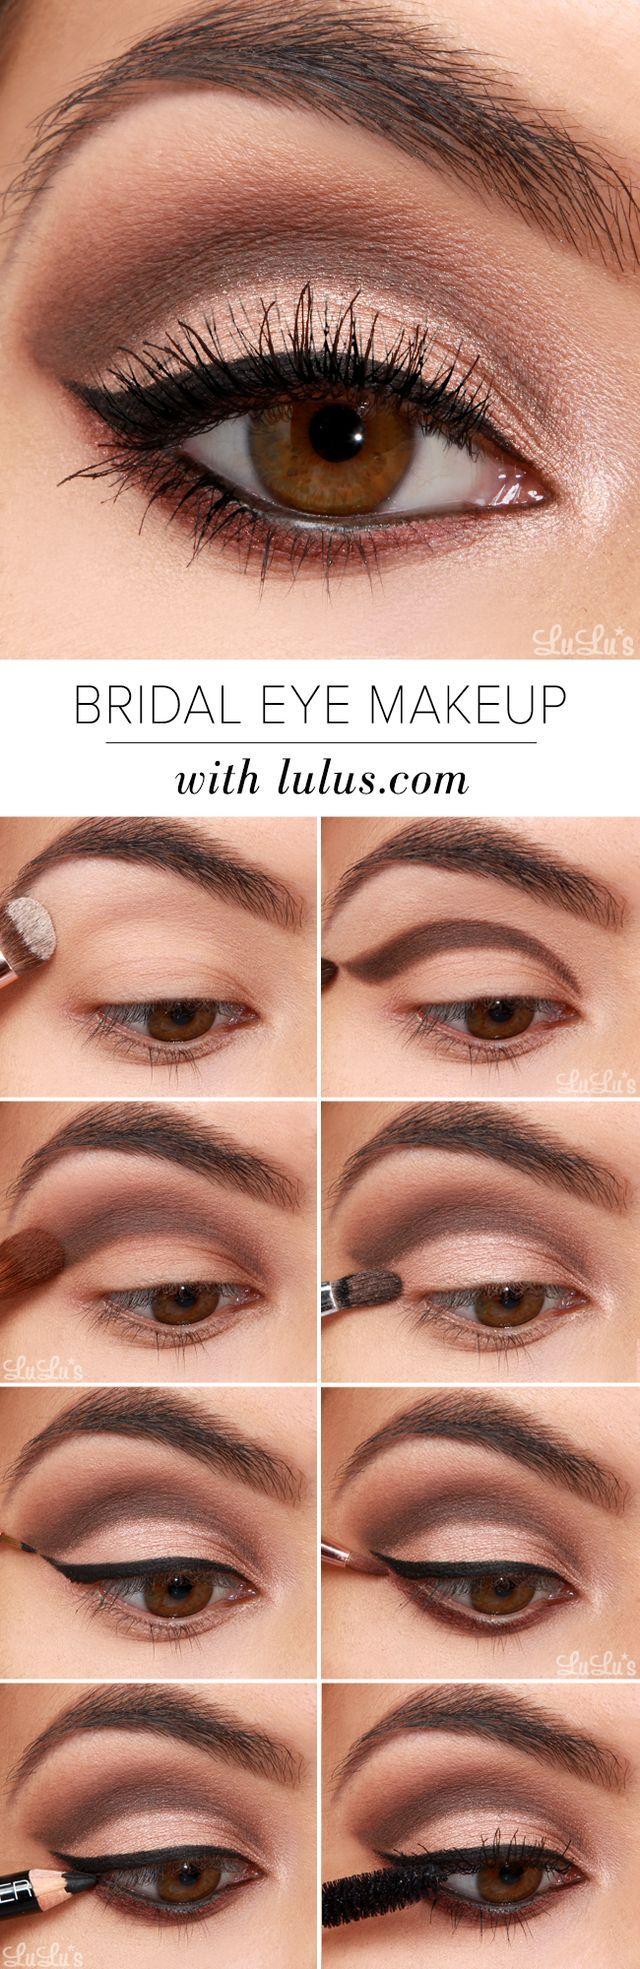 Wedding - LuLu*s How-To: Bridal Eye Makeup Tutorial (Lulus.com Fashion Blog)